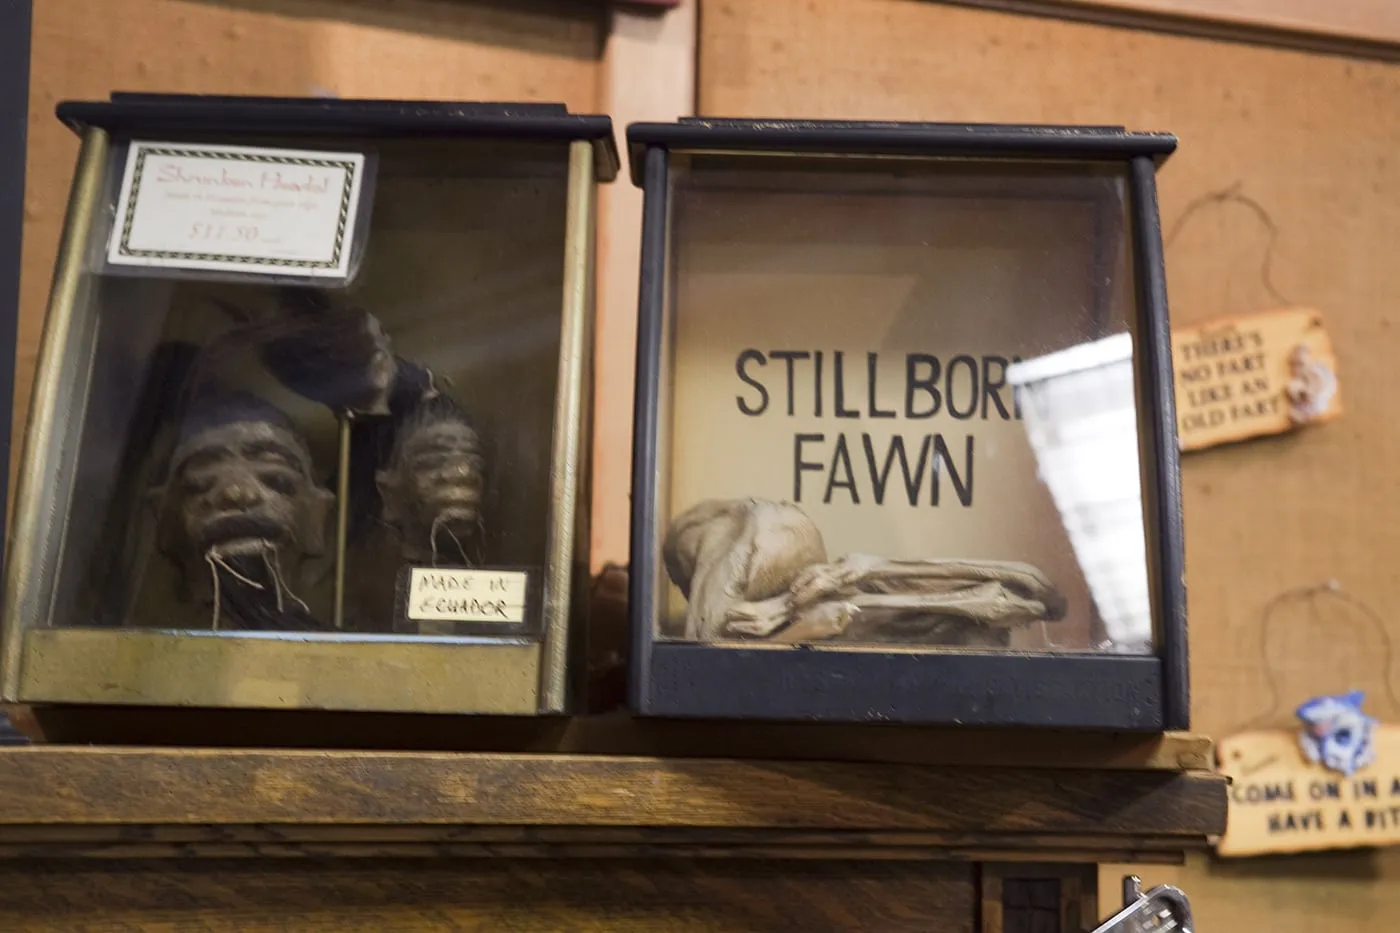 Stillborn fawn at Ye Olde Curiosity Shoppe in Seattle, Washington